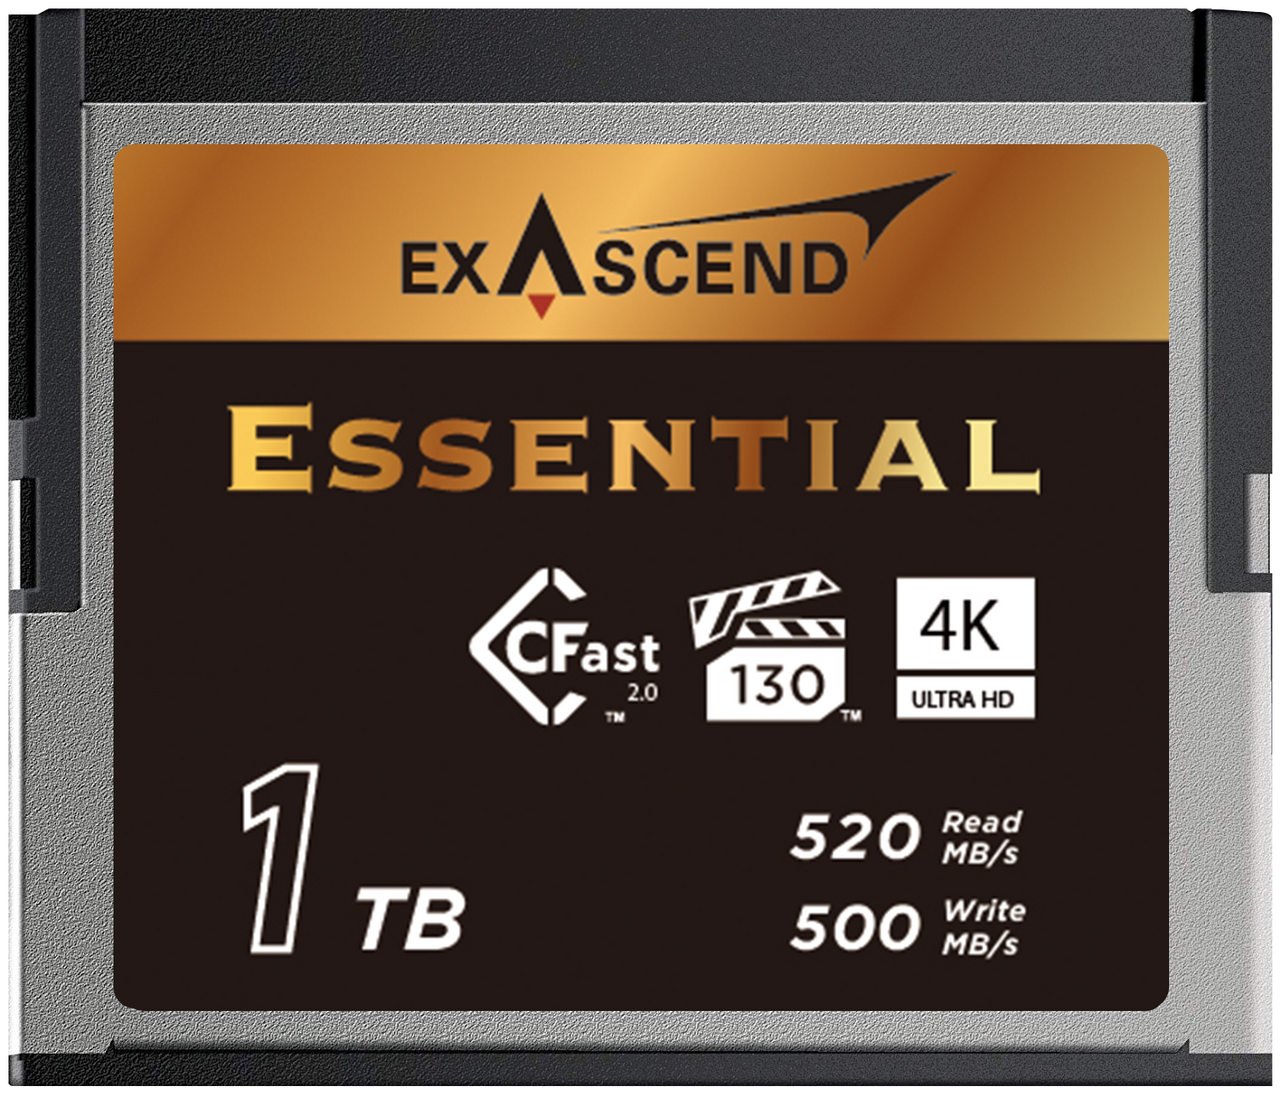 Exascend CFast 2.0 : Essential Series (1 TB)